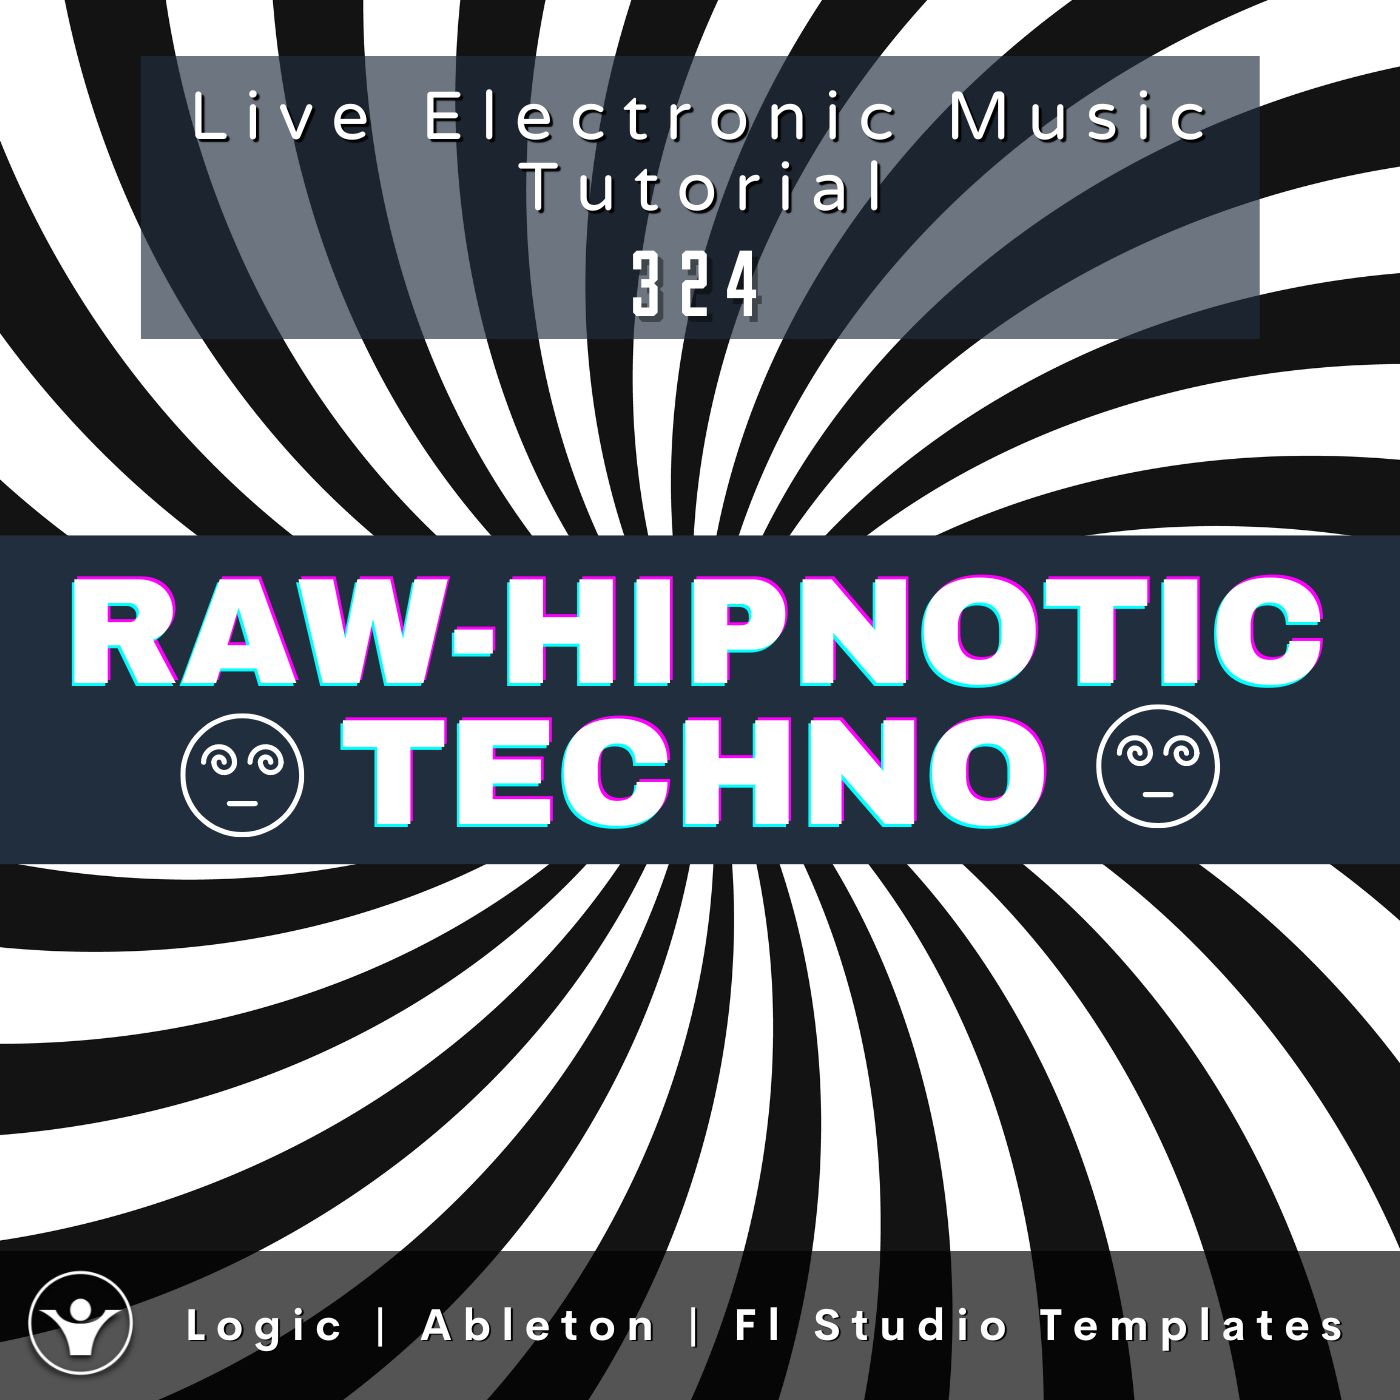 Raw - Hypnotic Techno Template for Logic, Ableton, FL Studio + Free  Tutorial - LEMT 324